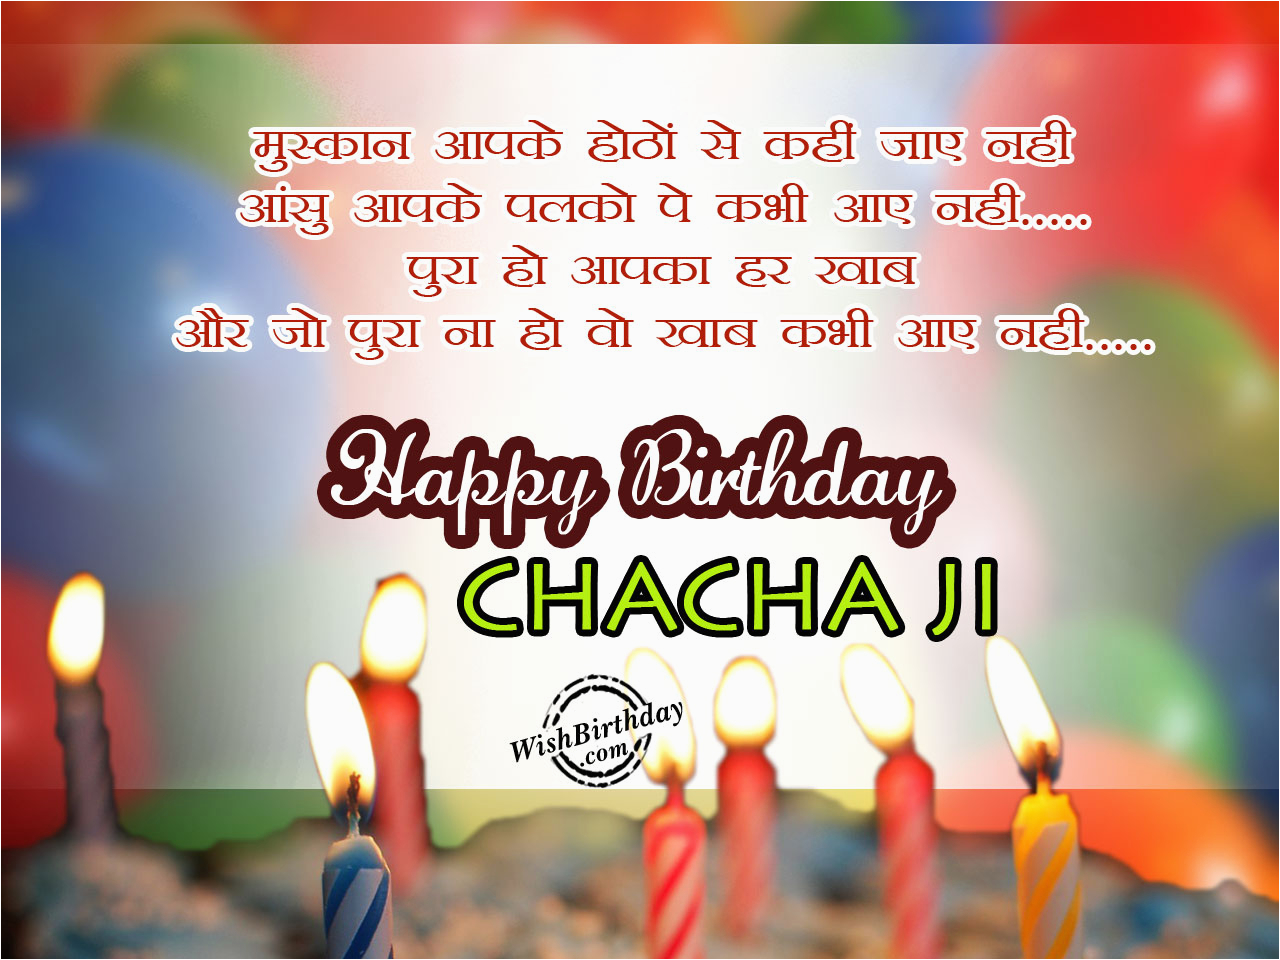 birthday wishes for chachu chacha ji